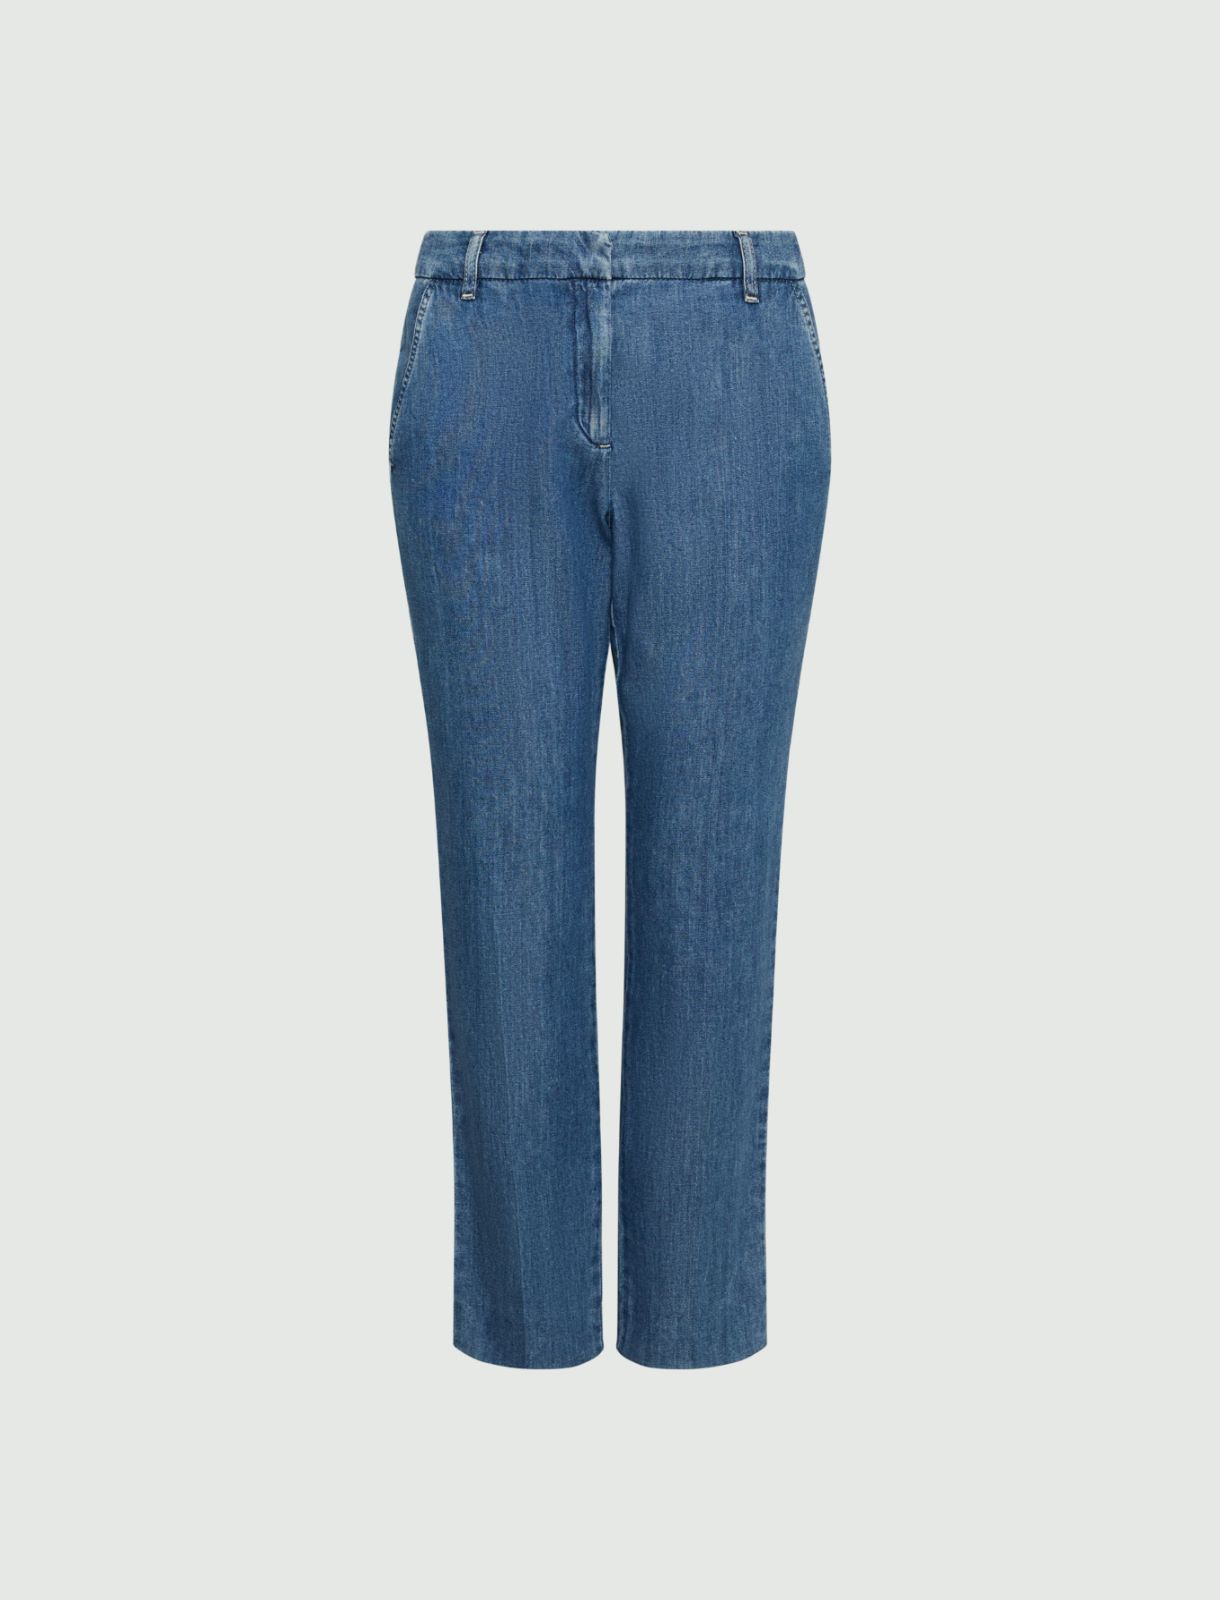 Chino jeans, blue jeans | Marella